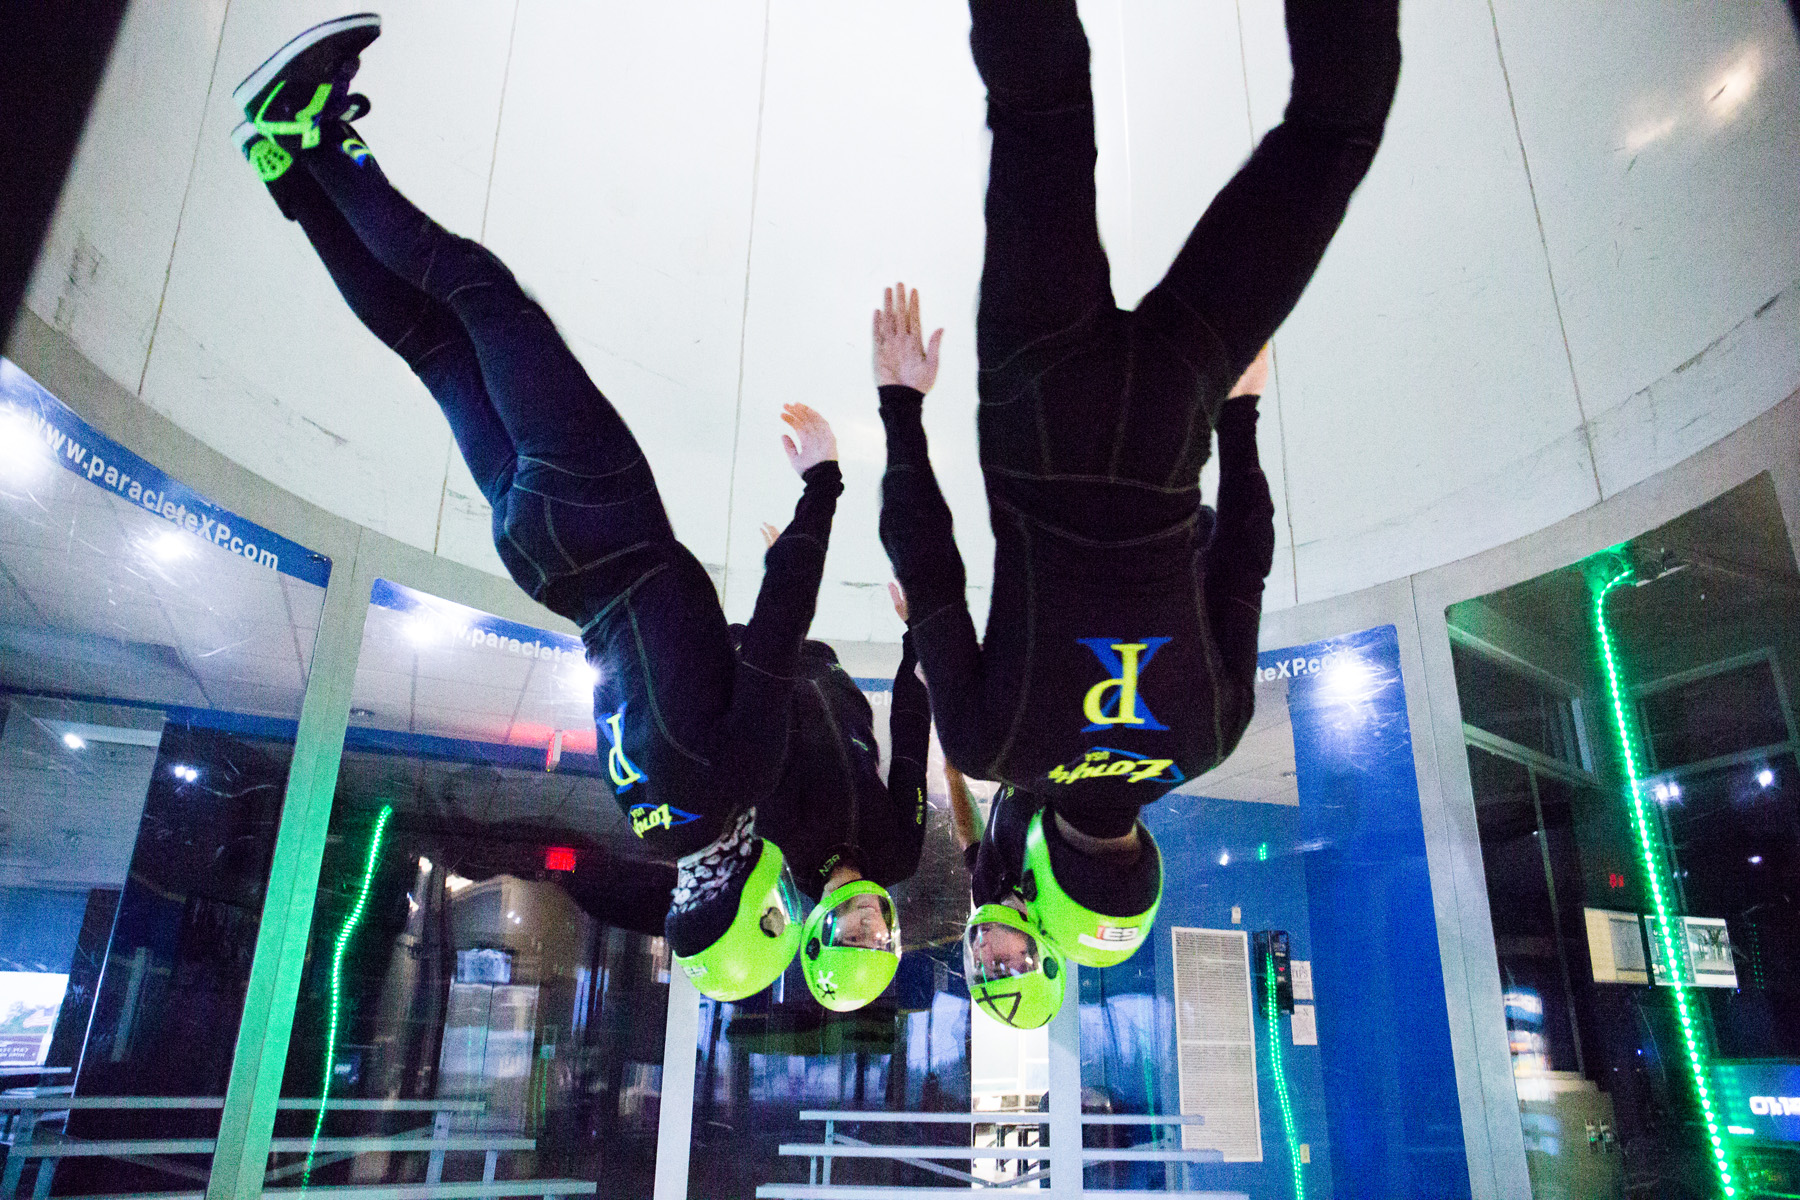 Vertical Formation Skydiving | Paraclete XP Indoor Skydiving